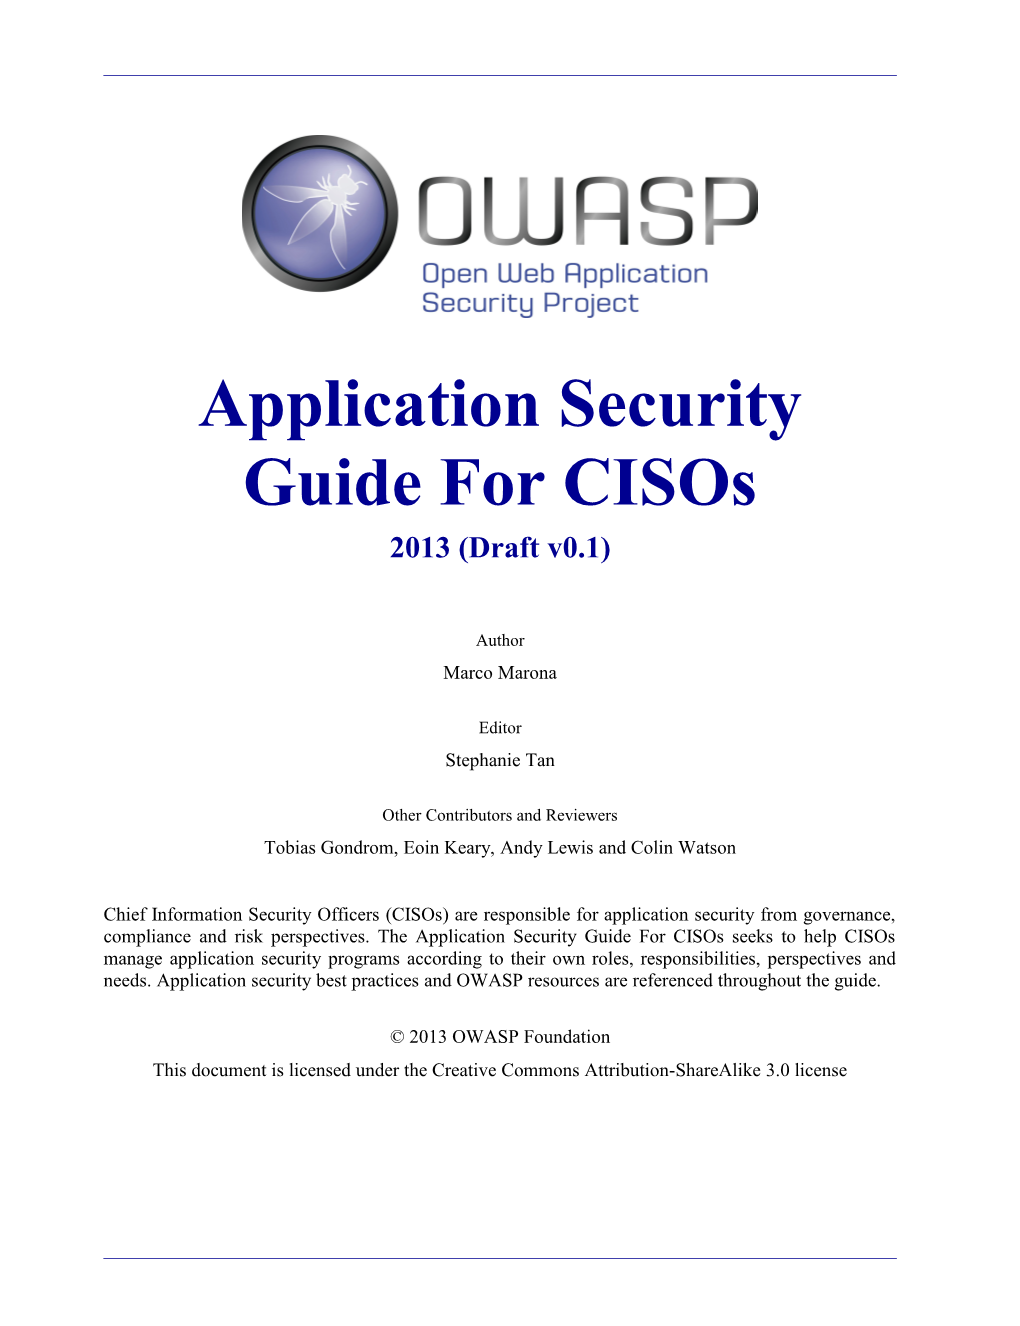 OWASP Application Security Guide for Cisos